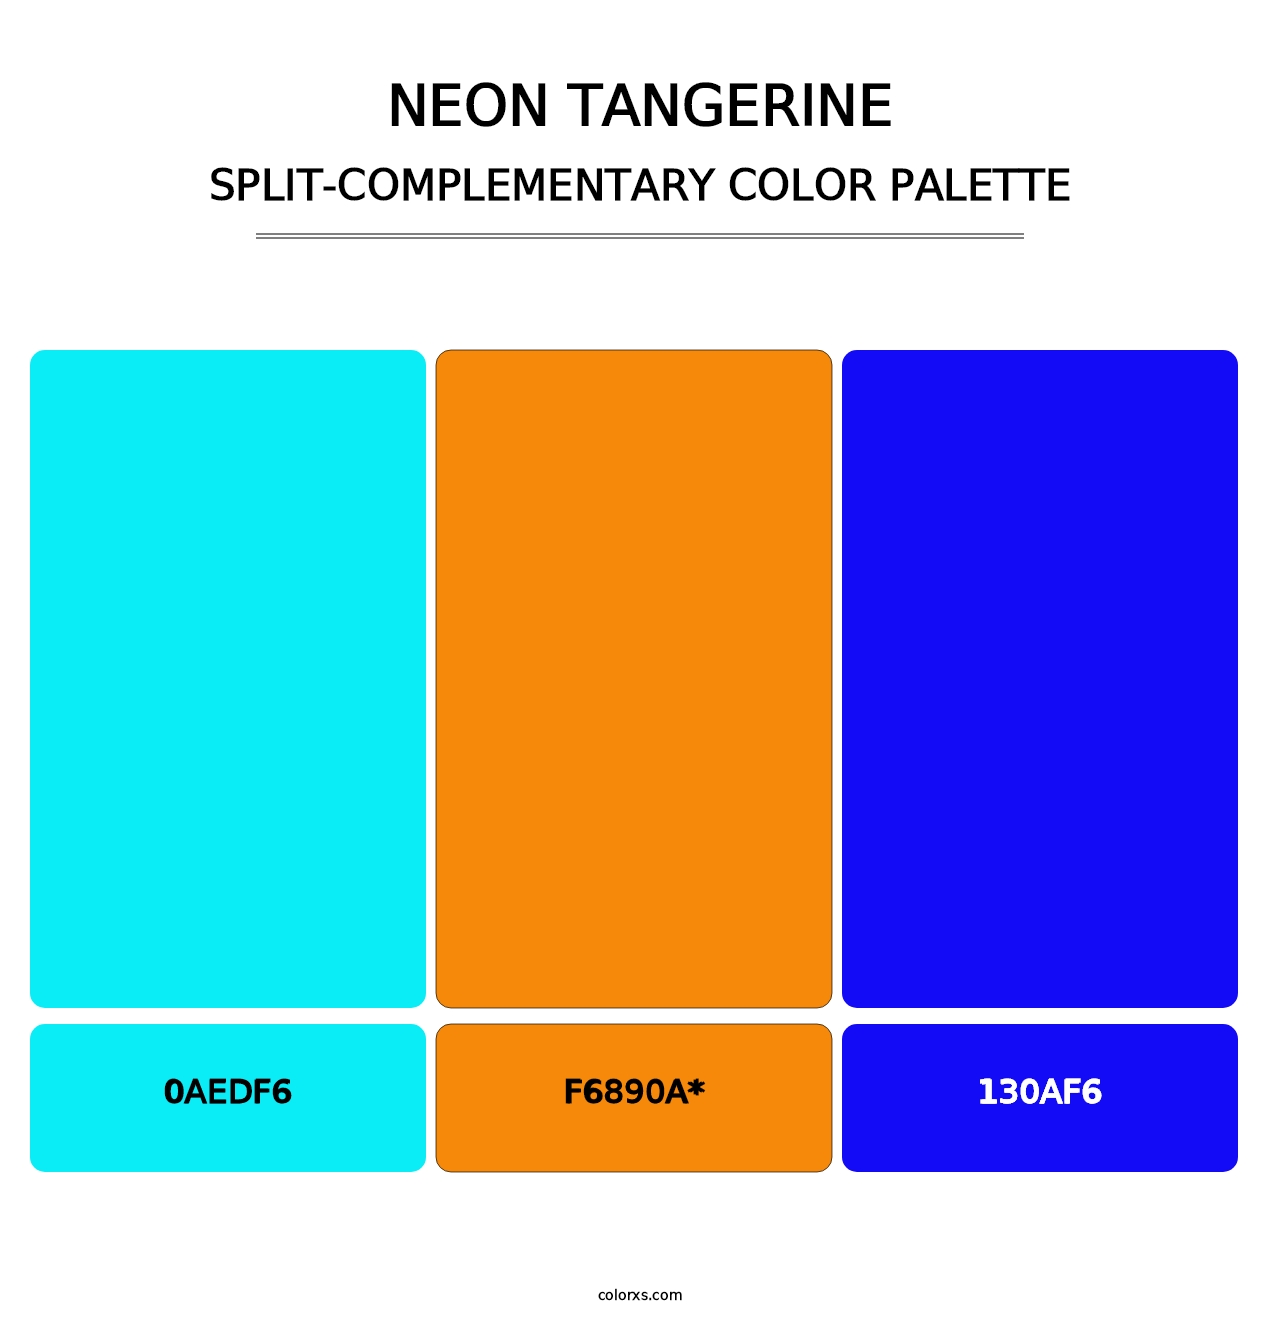 Neon Tangerine - Split-Complementary Color Palette